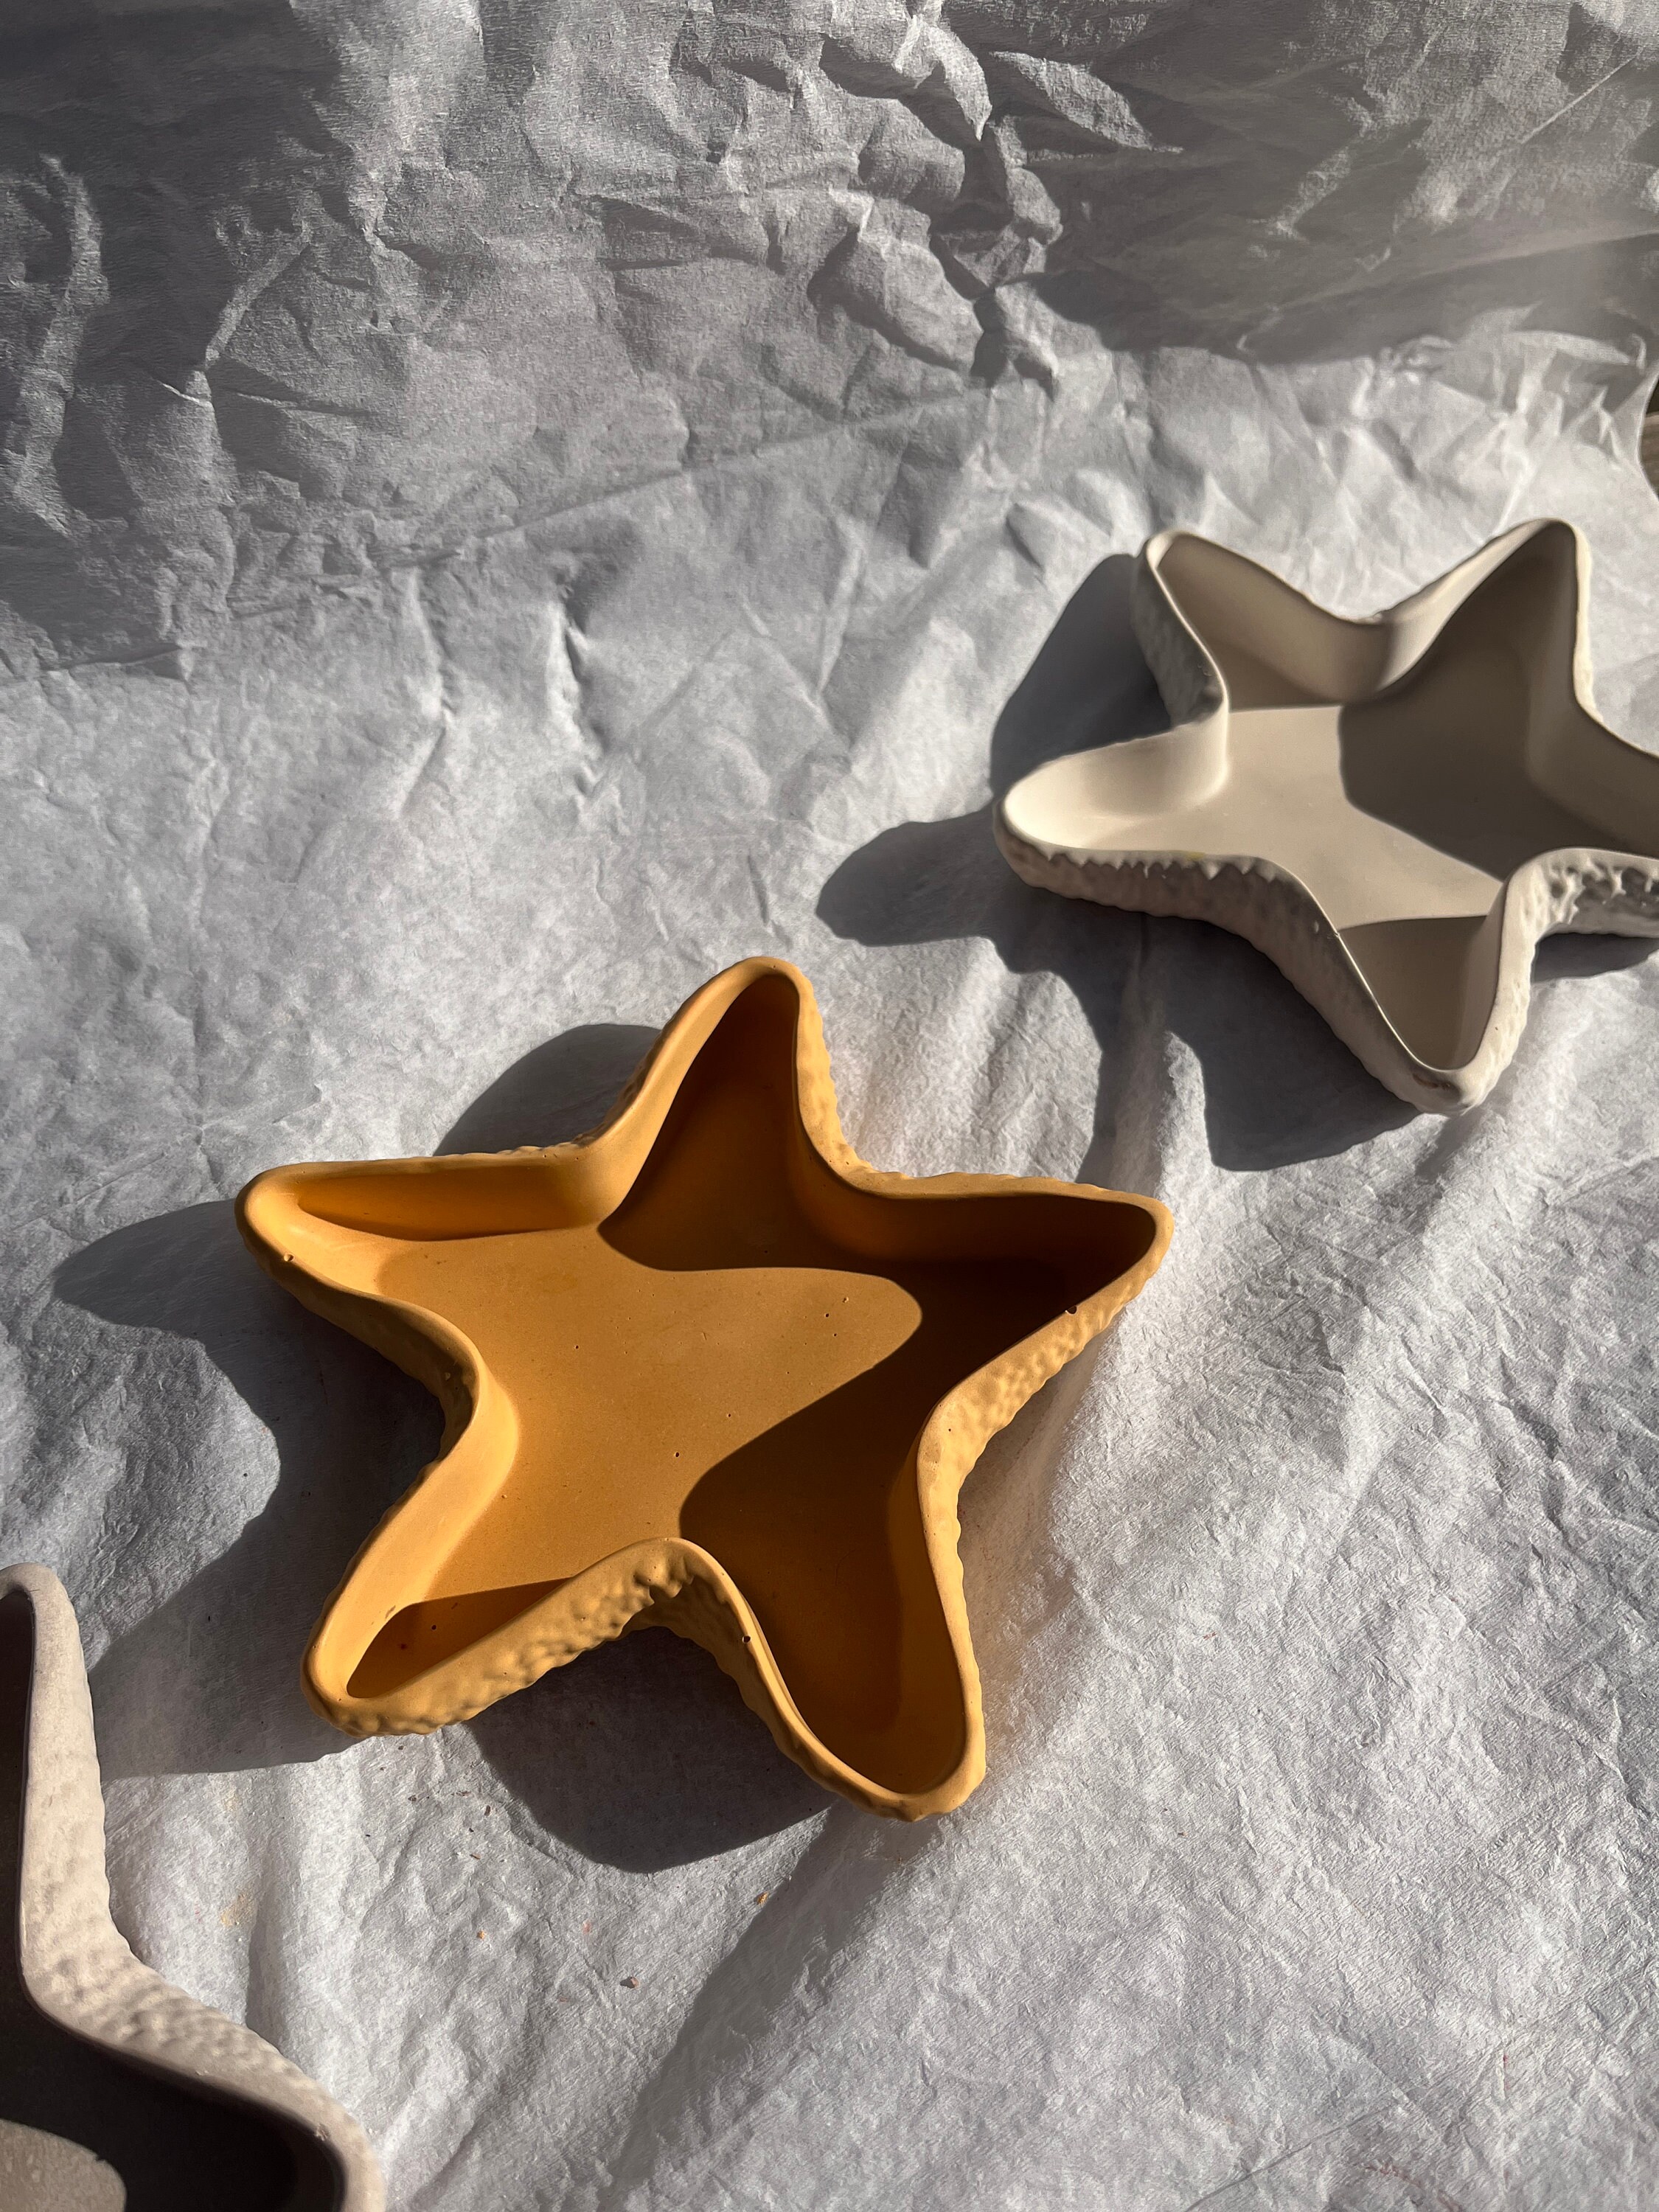 Florida Star fish aka: sea stars  Sailors valentine, Florida bay, Starfish